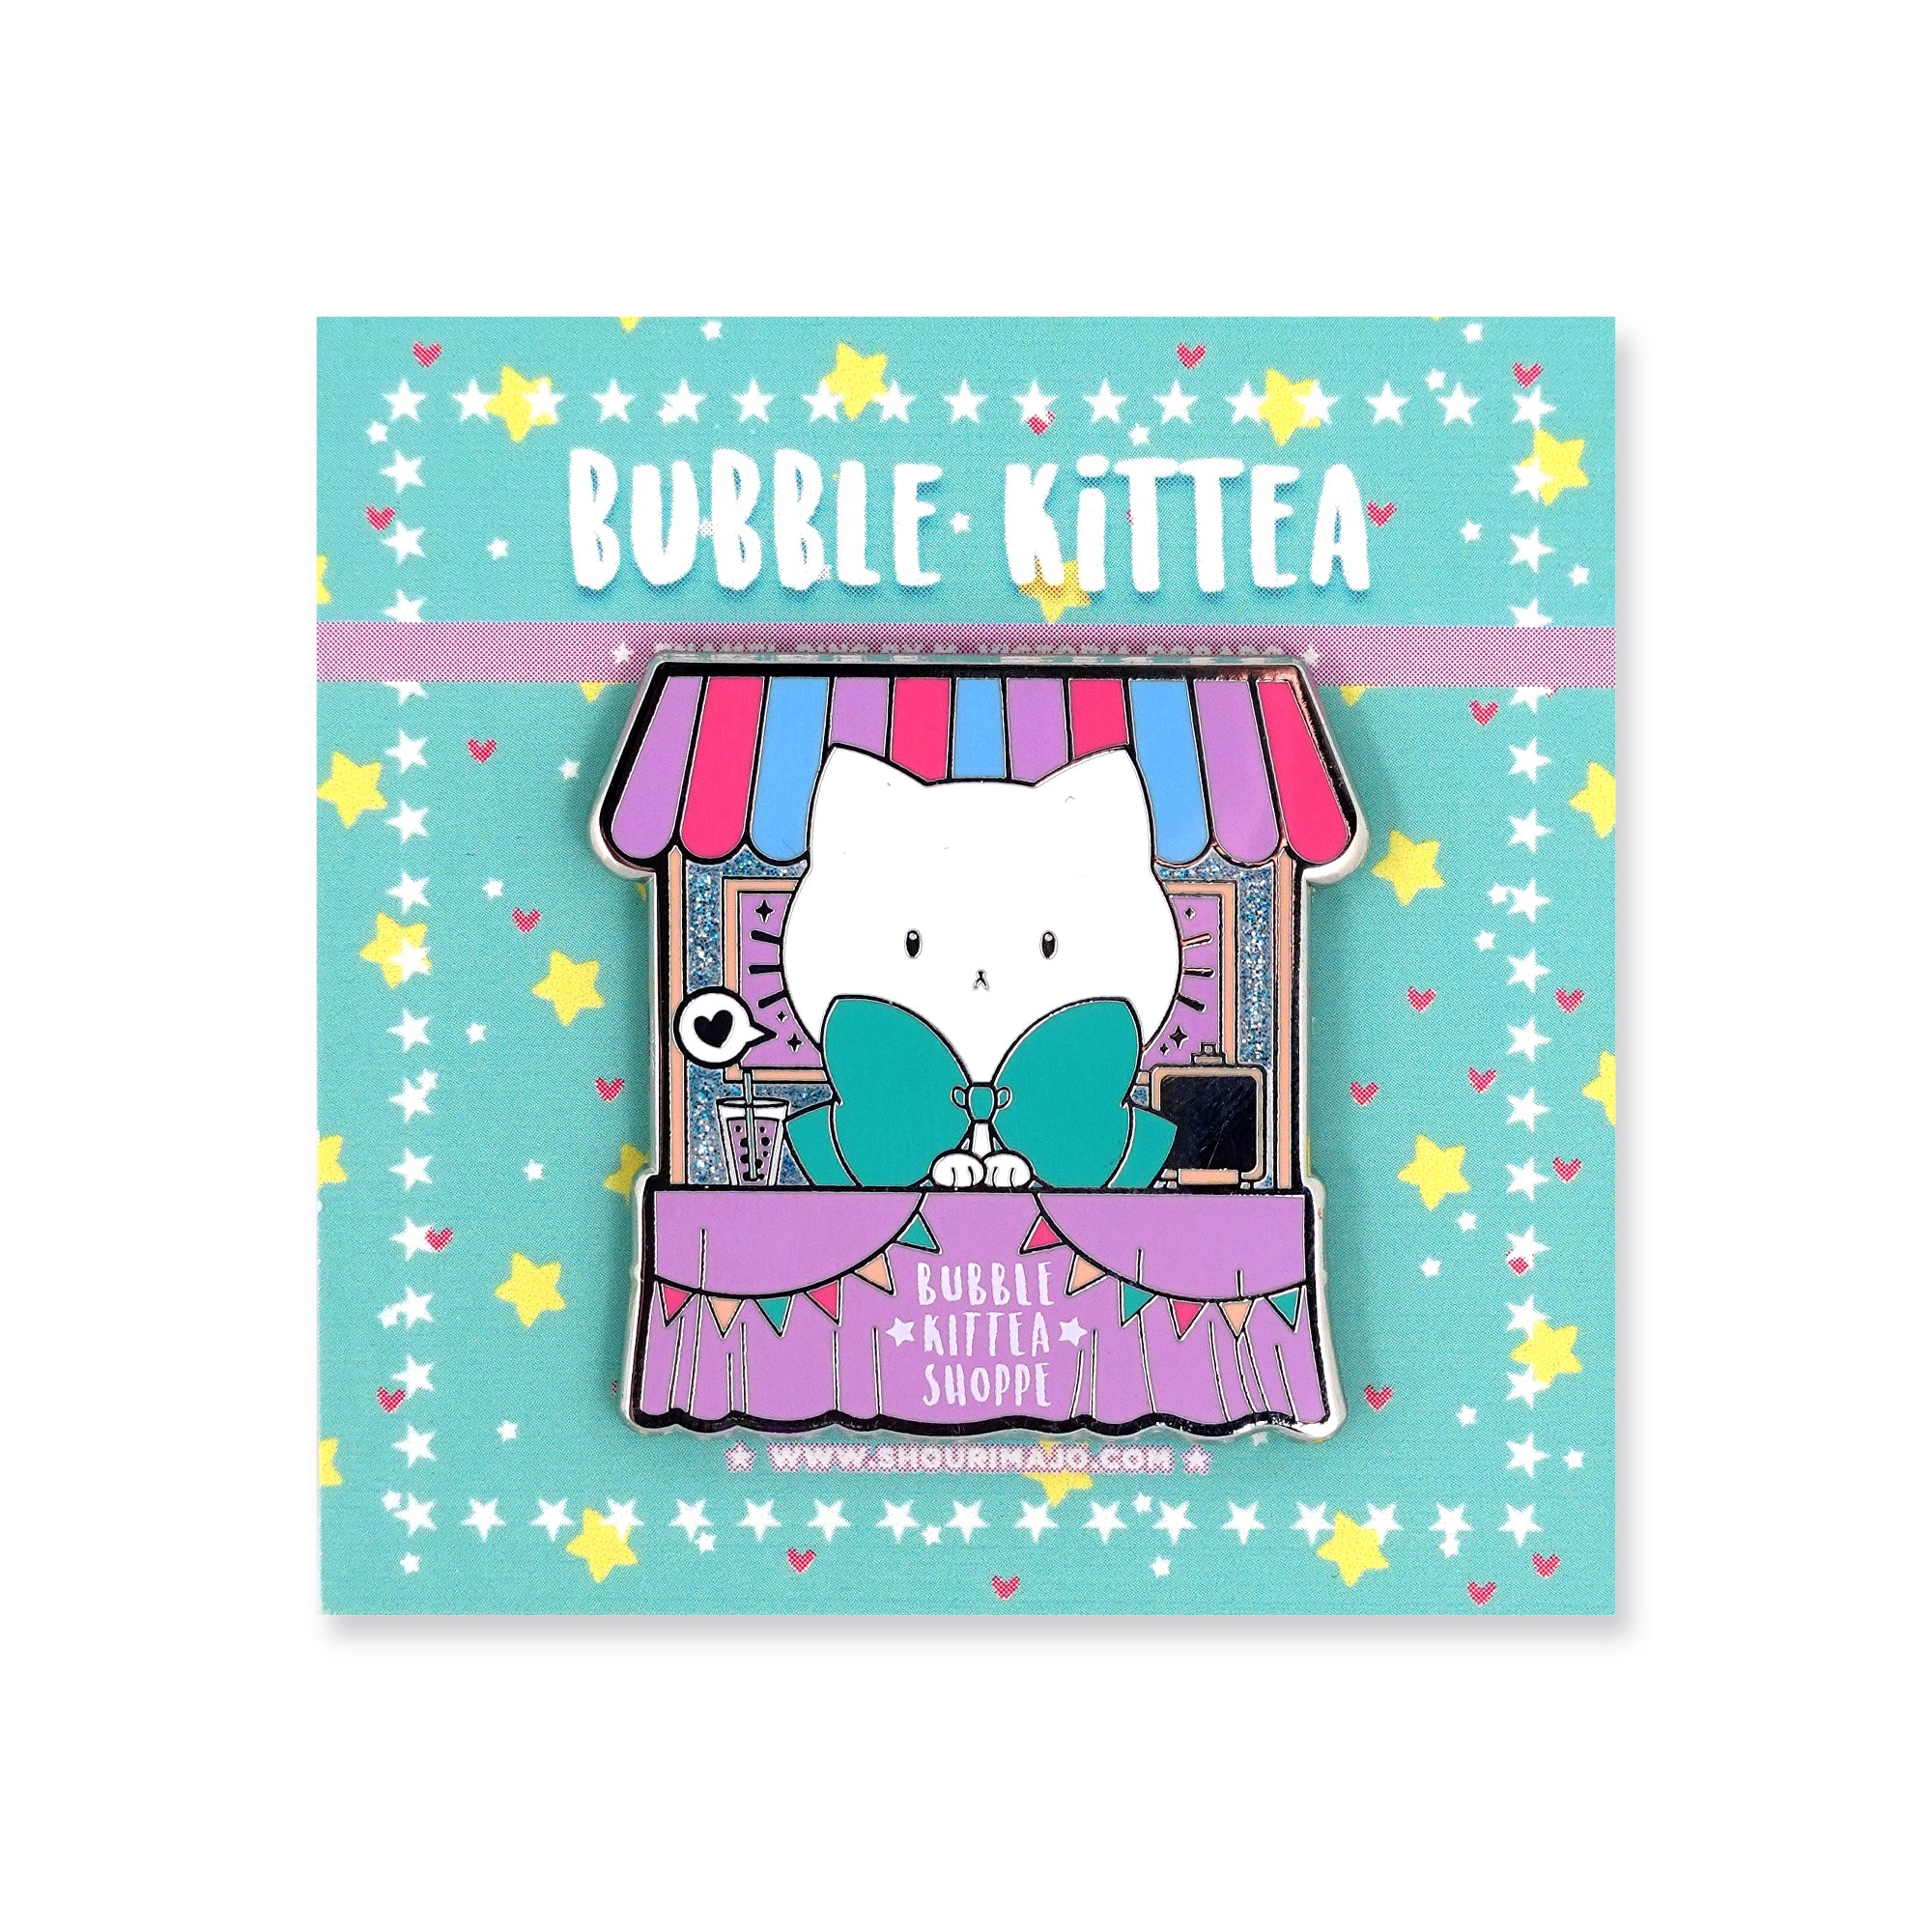 Bubble Kittea Shoppe Enamel Pin